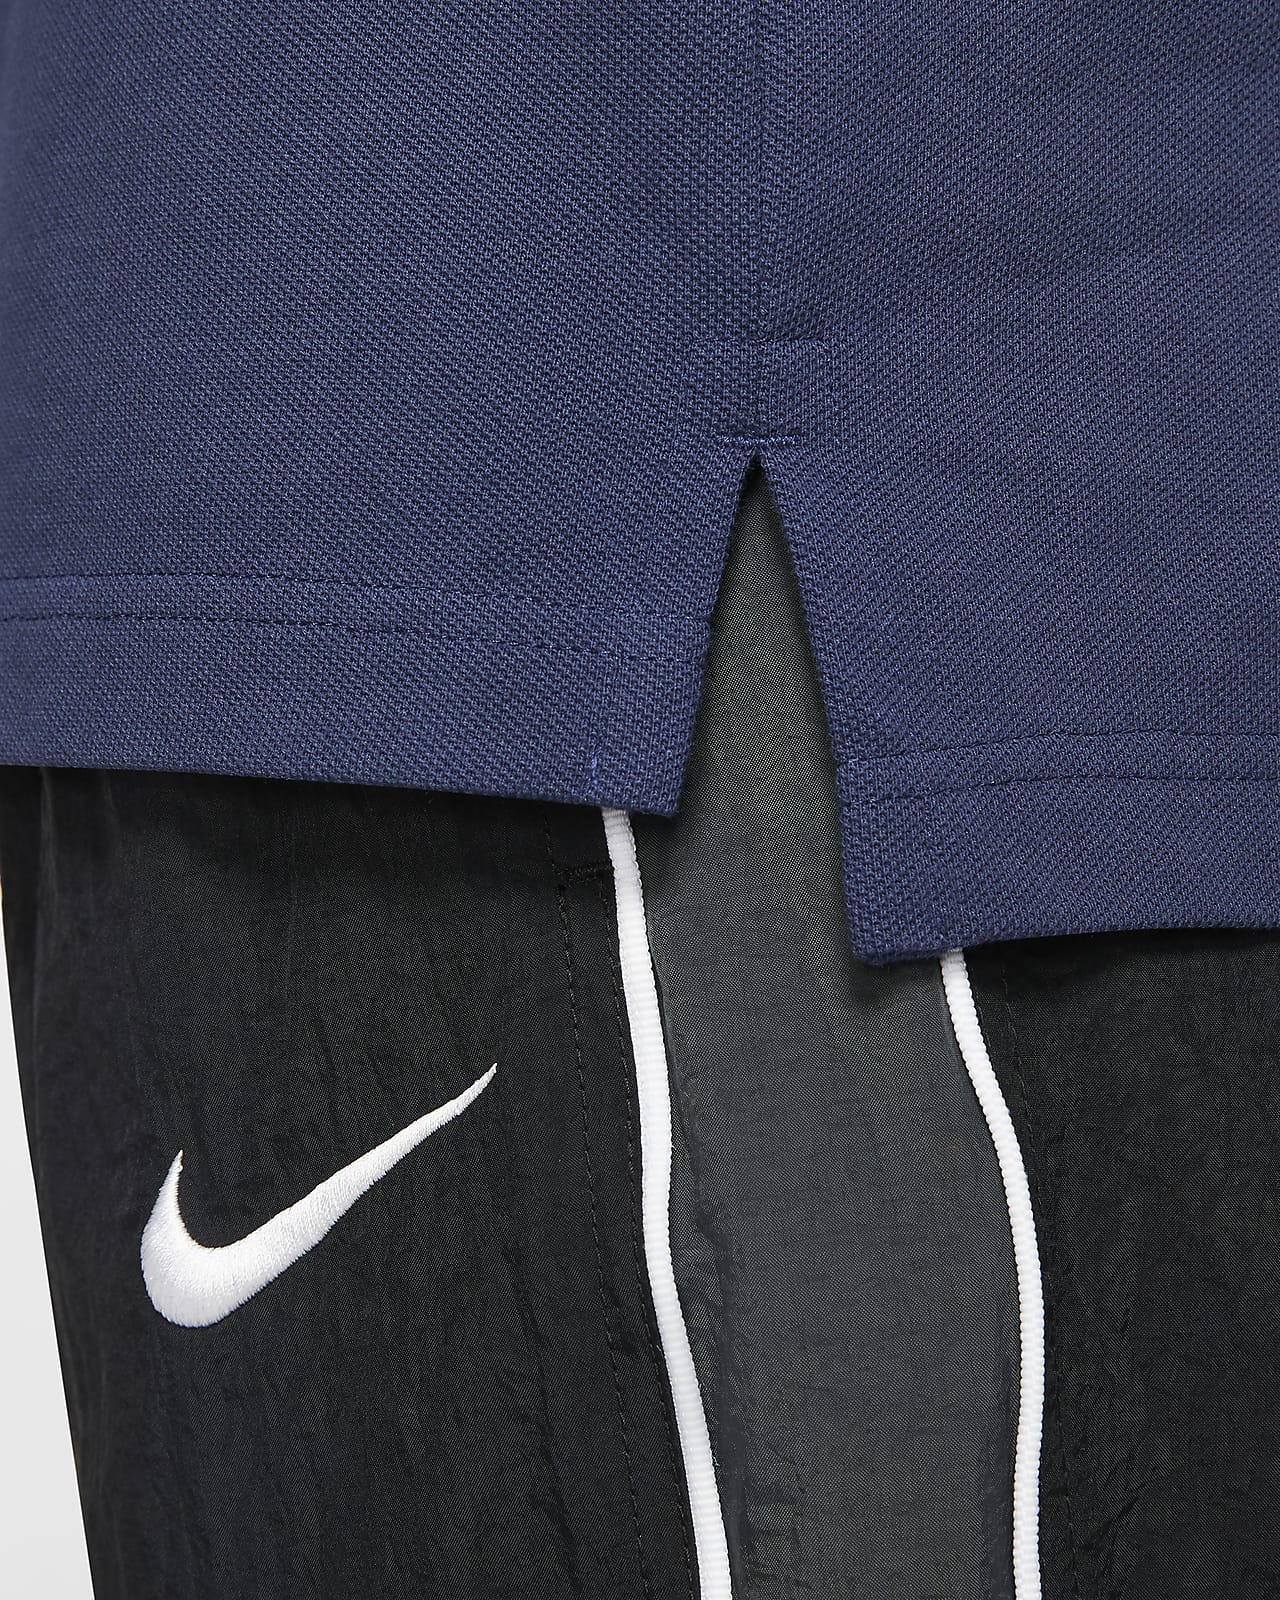 Polo Nike Sportswear pour Homme